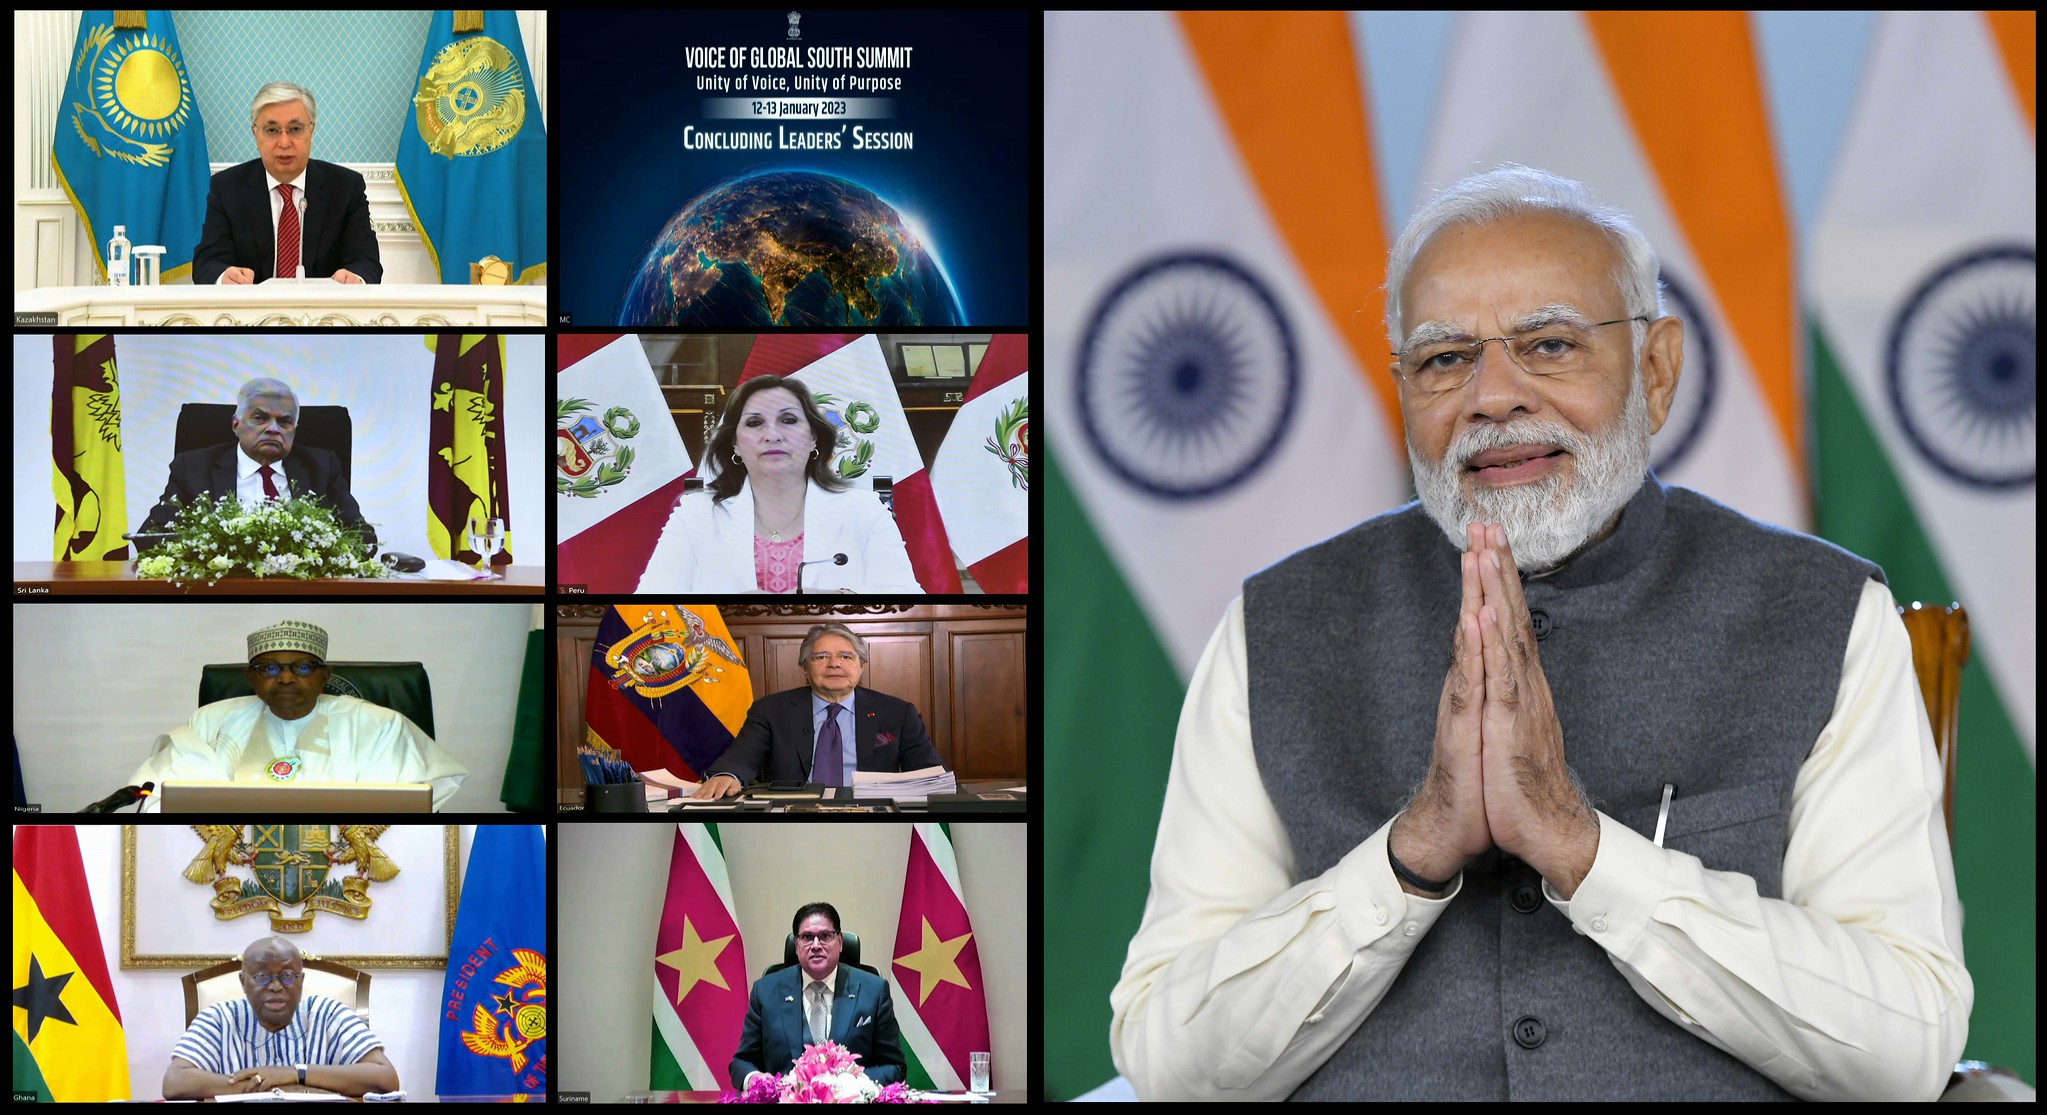 India’s premier Narendra Modi leidt de openingssessie van de digitale Voice Global South Summit op 12 and 13 januari 2023. © MEA Photogallery / Flickr.